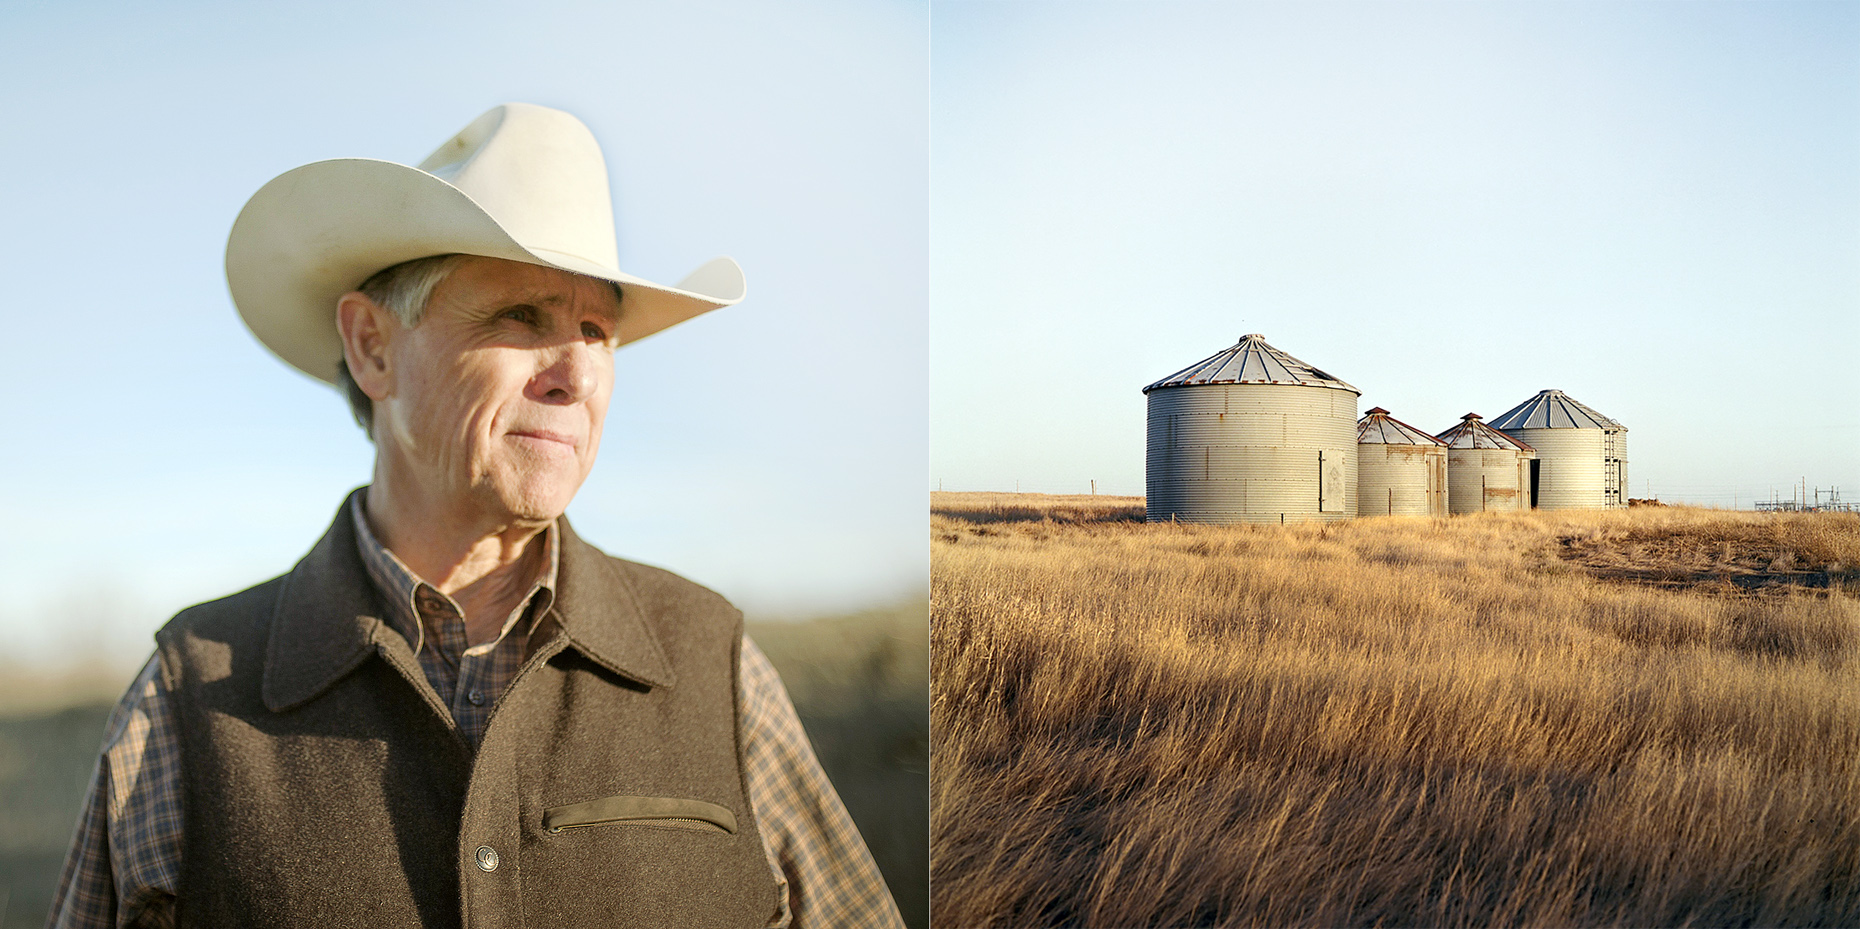 brandon_thibodeaux_portraits_documentary_texas_agriculture_cowboy_landscape_photography_001